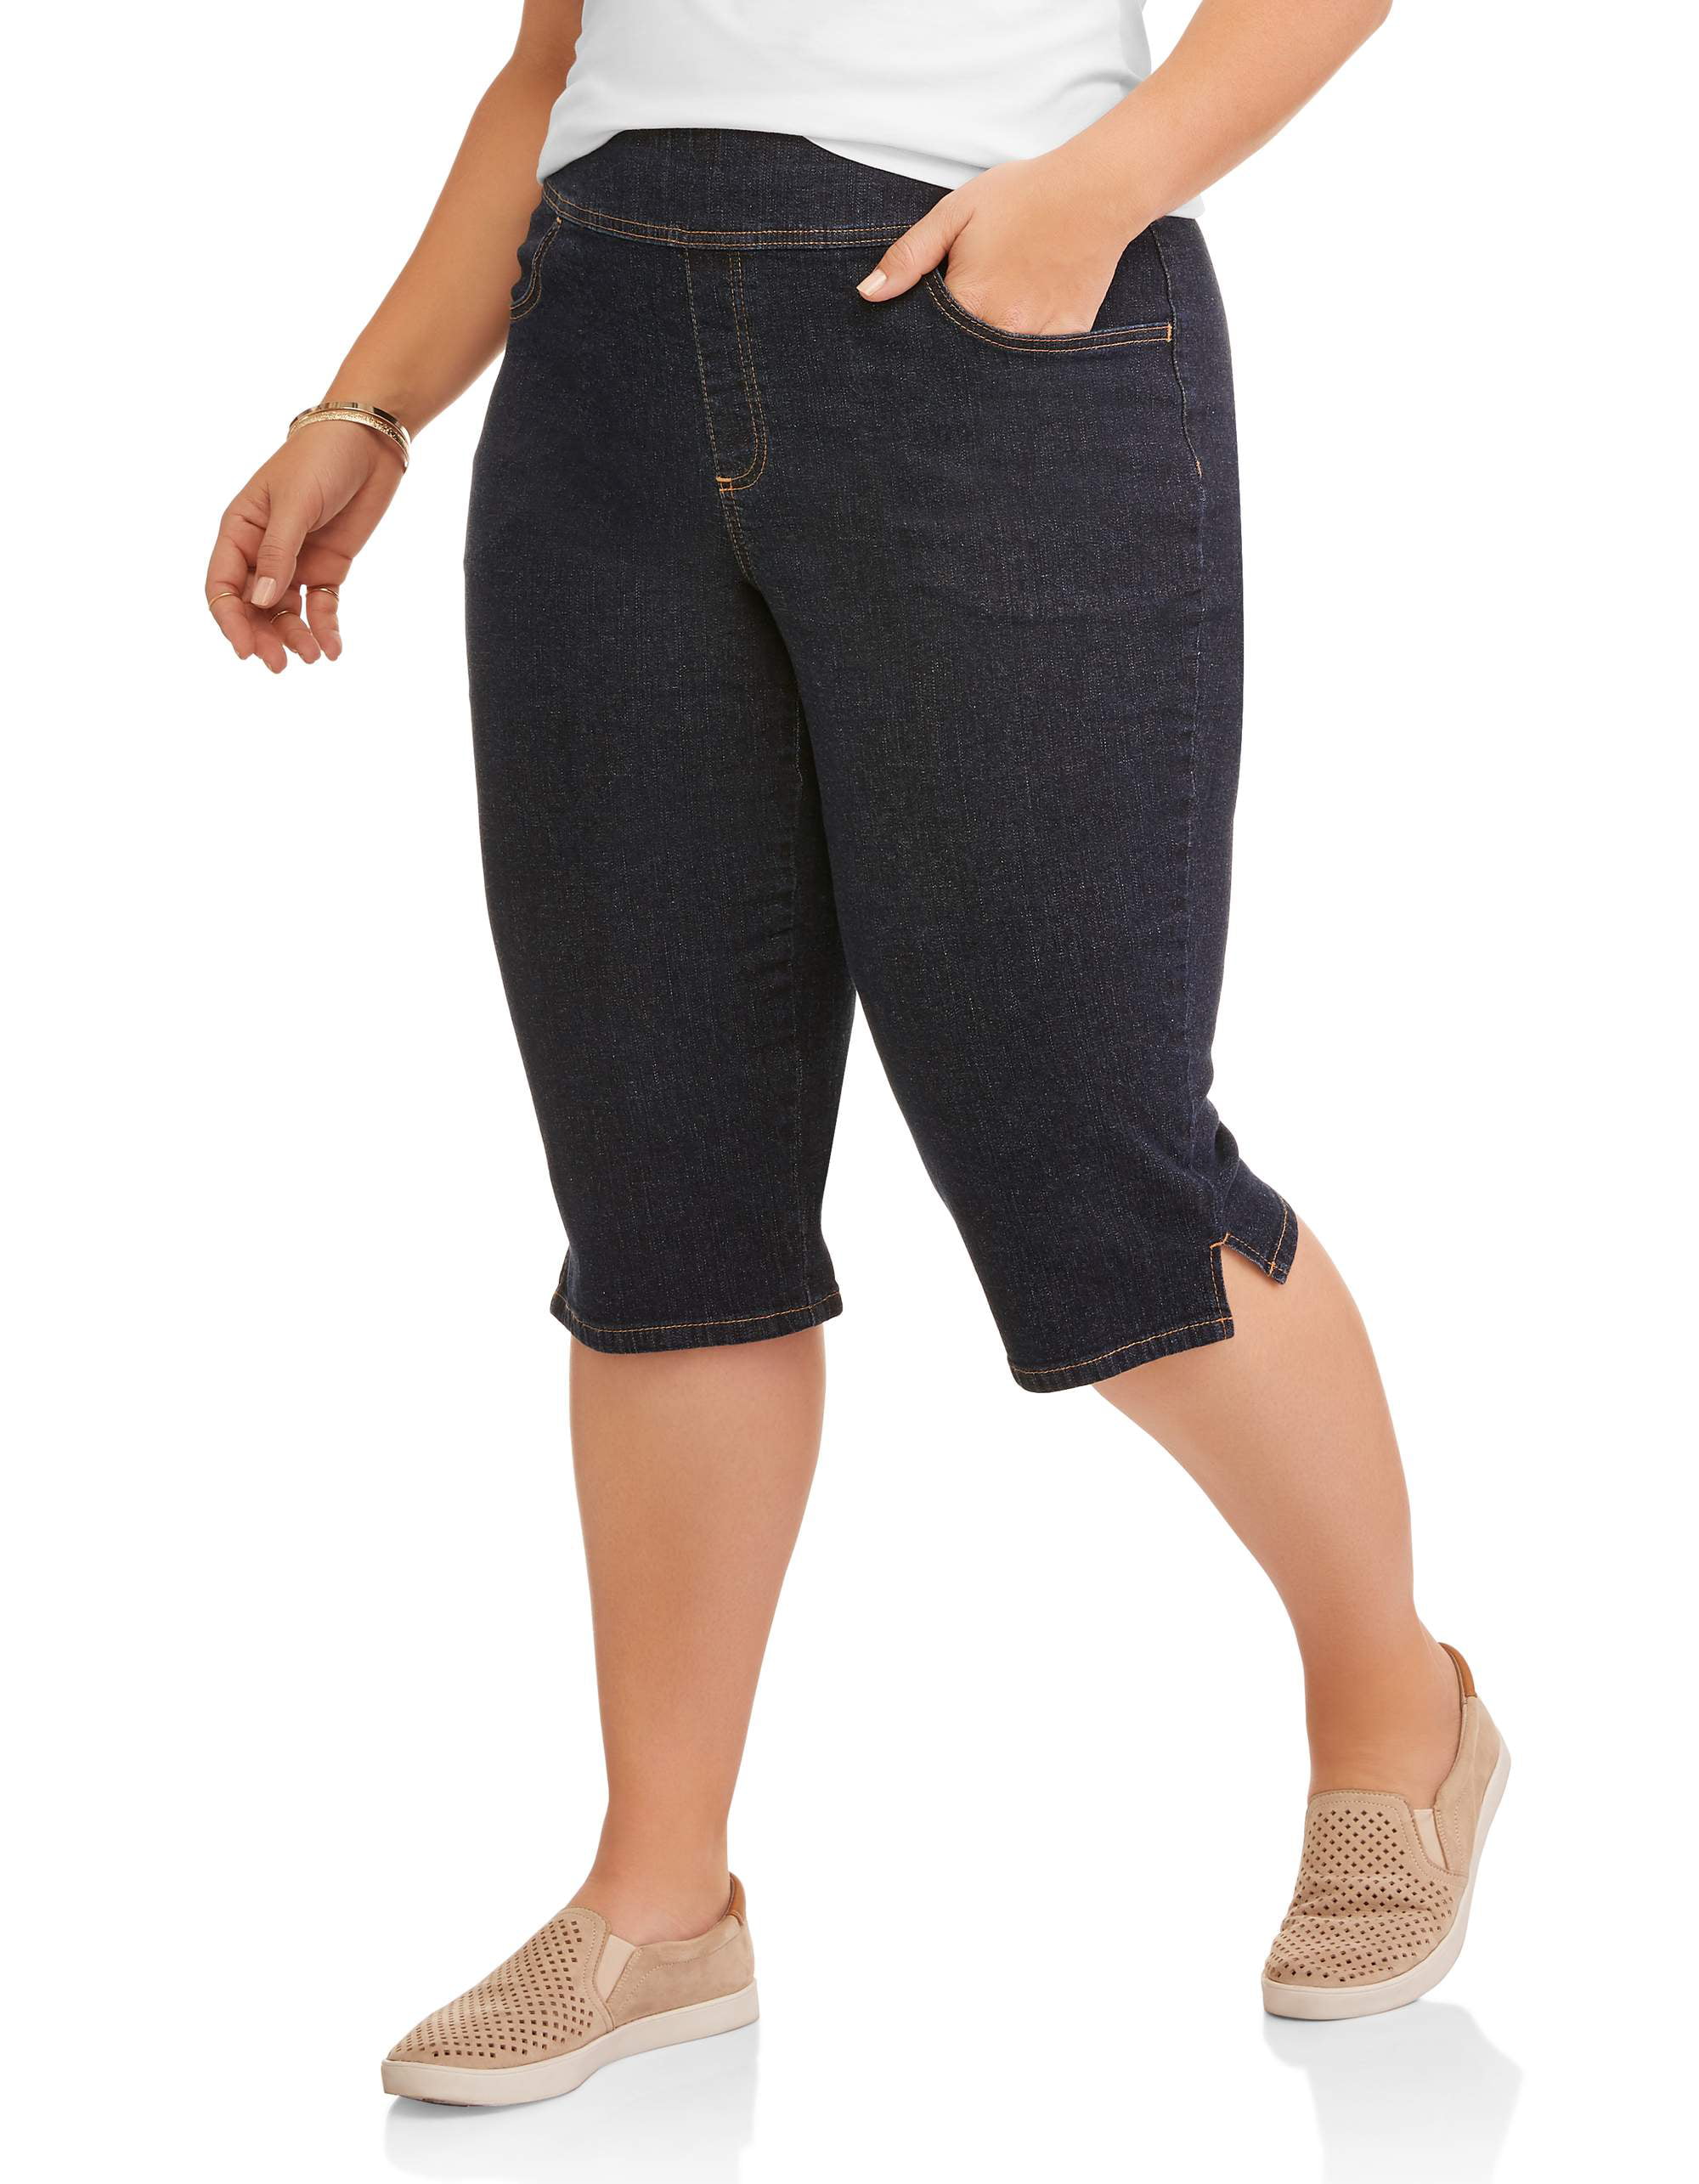 Terra & Sky Women's Plus Size Curvy Capri Pants 